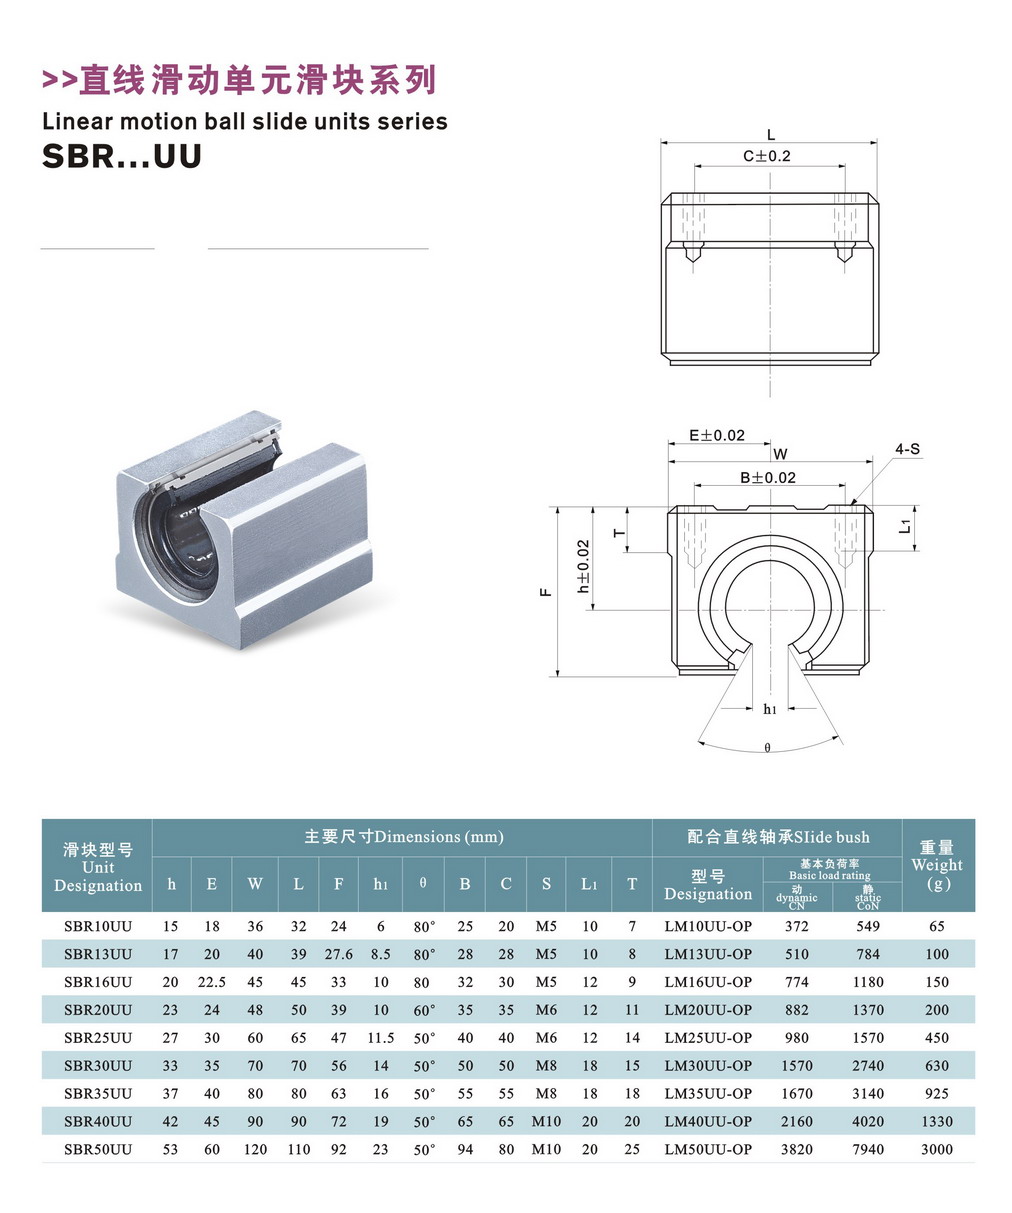 SBRUU catalog.jpg